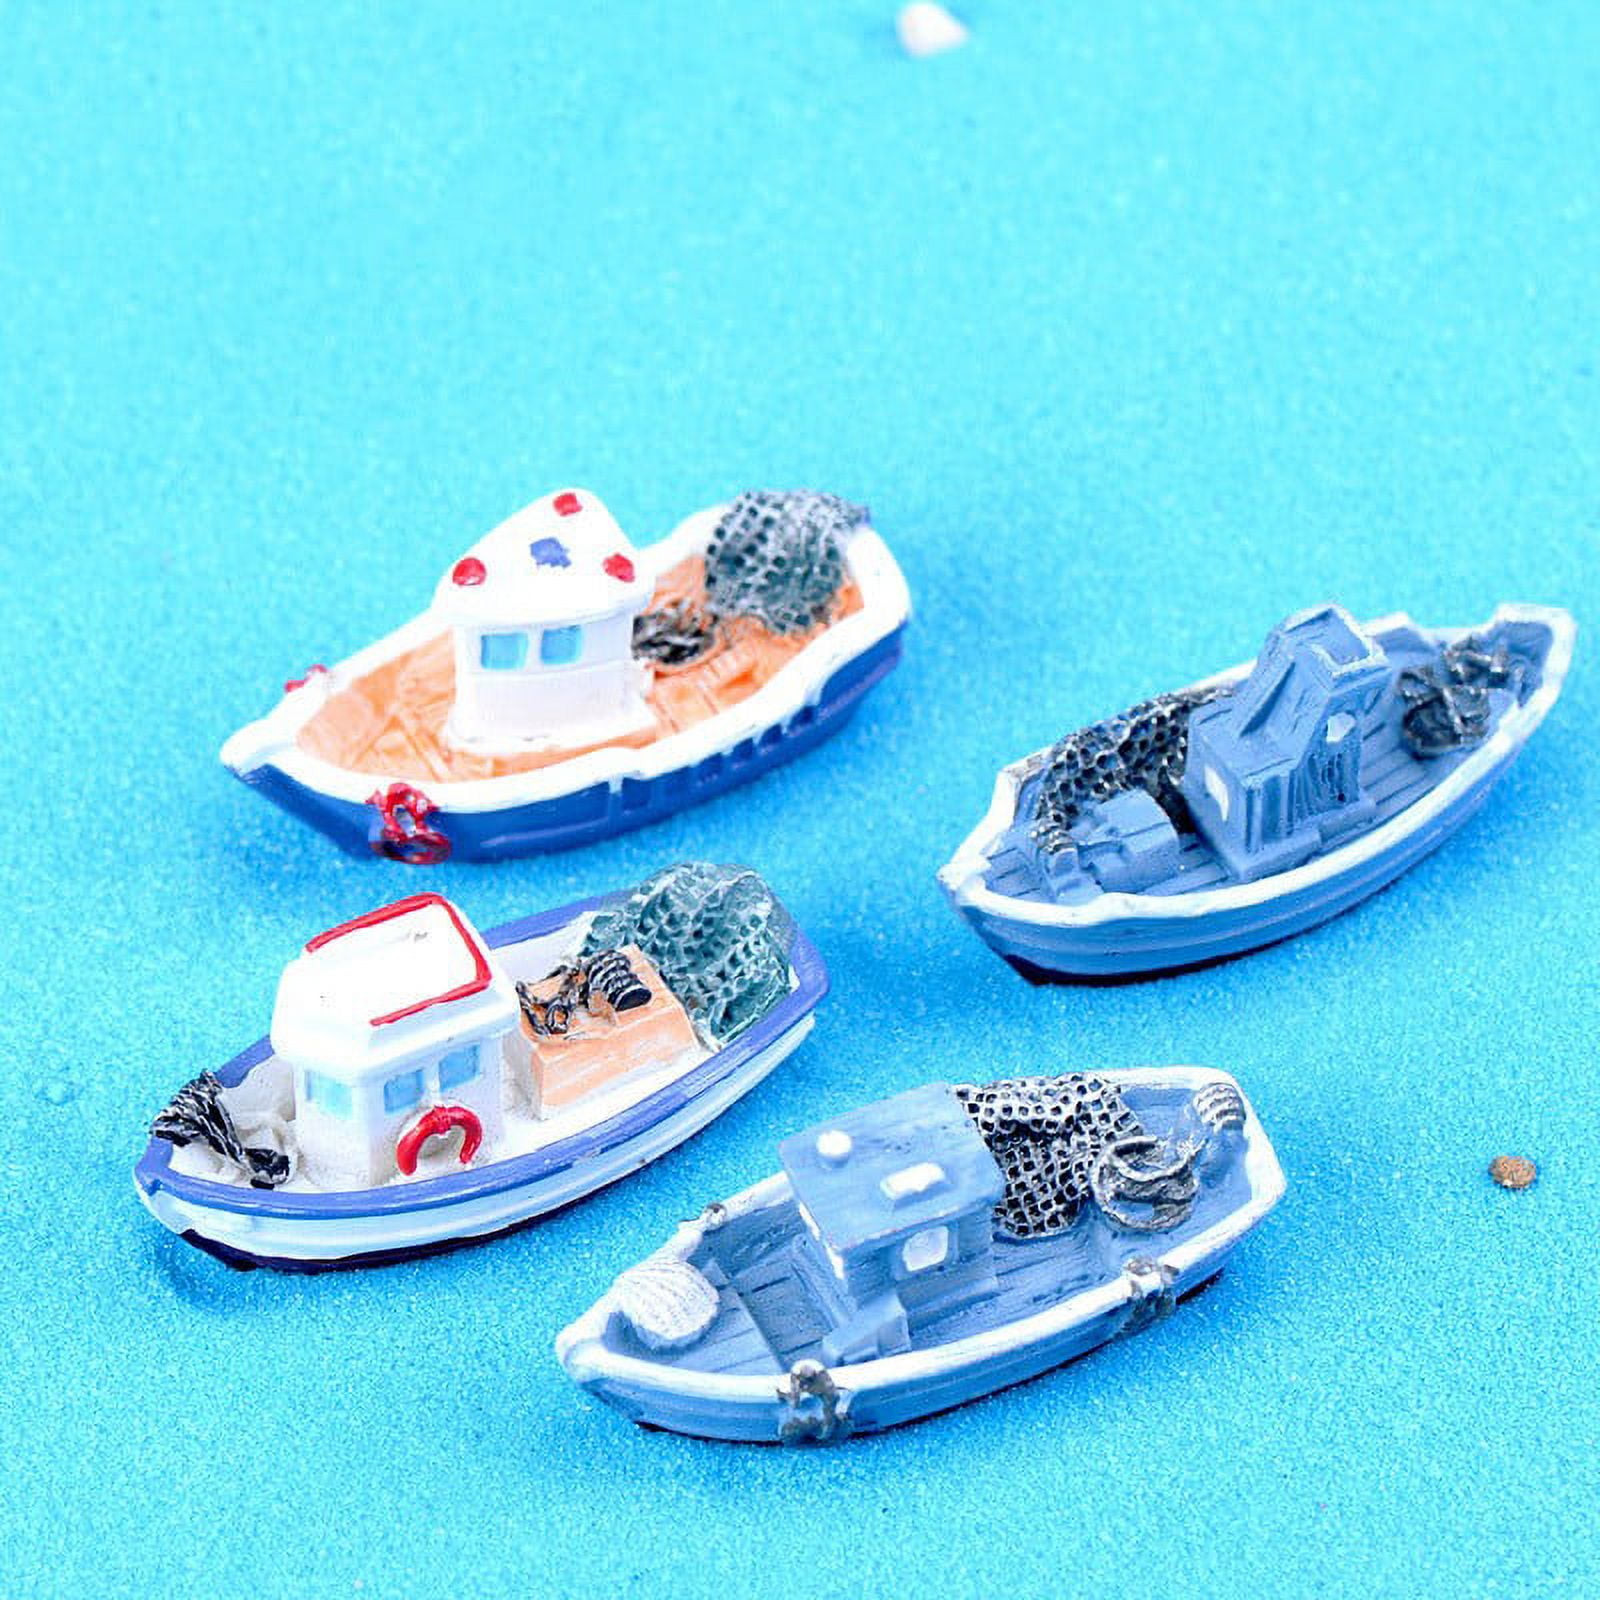 Sufanic Miniature Mini Boat Model Fishing Ship Toy DIY Craft for